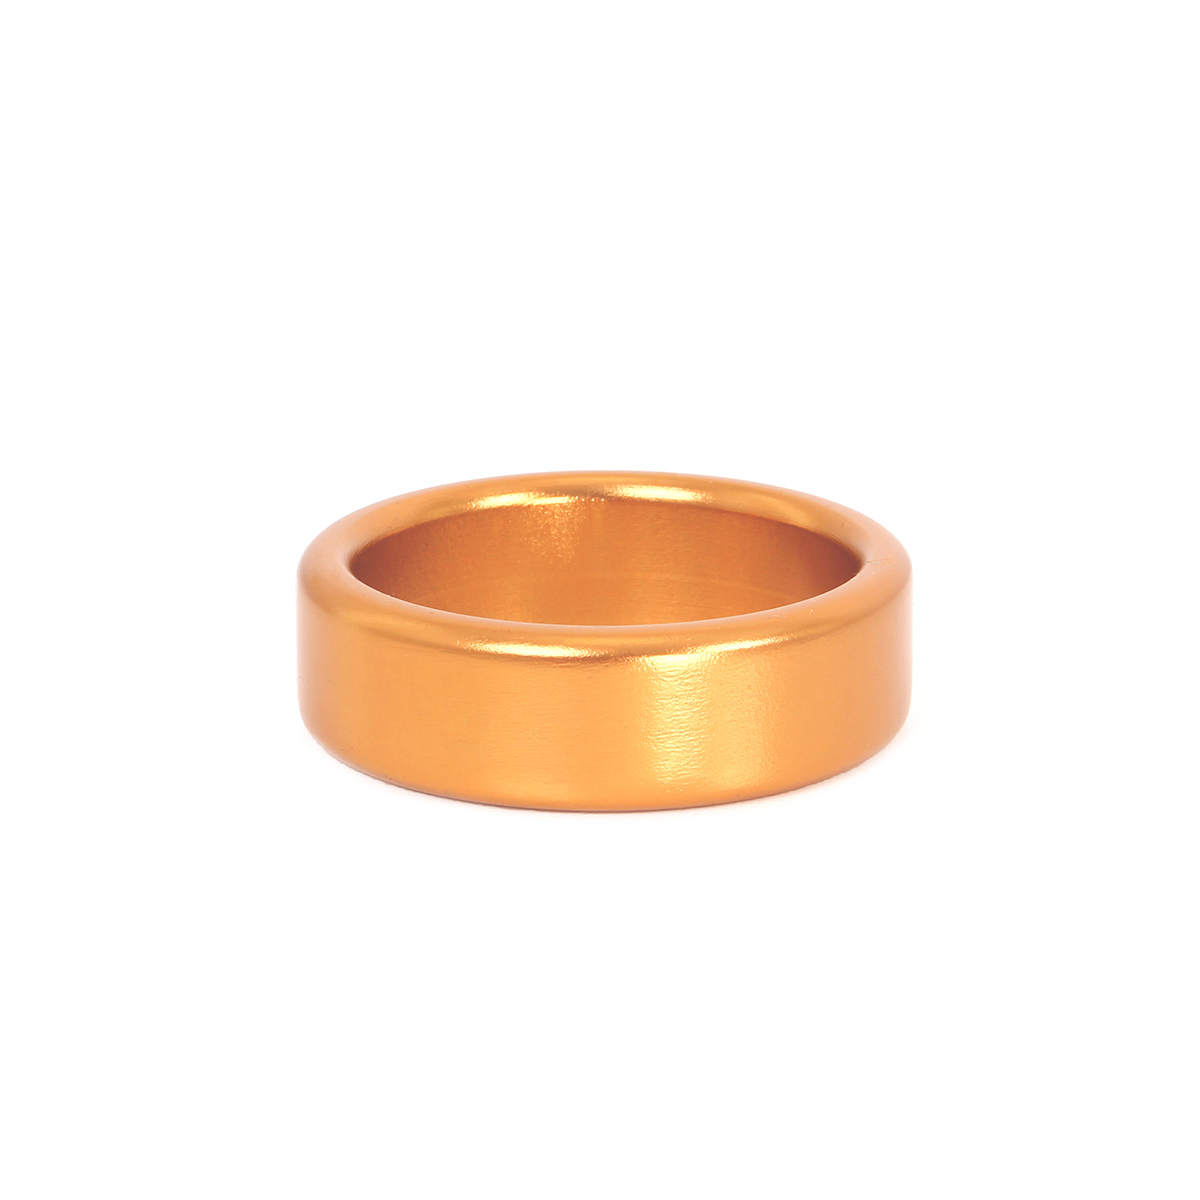 Cockring-Gold-Aluminium-50-mm-OPR-3330069-3